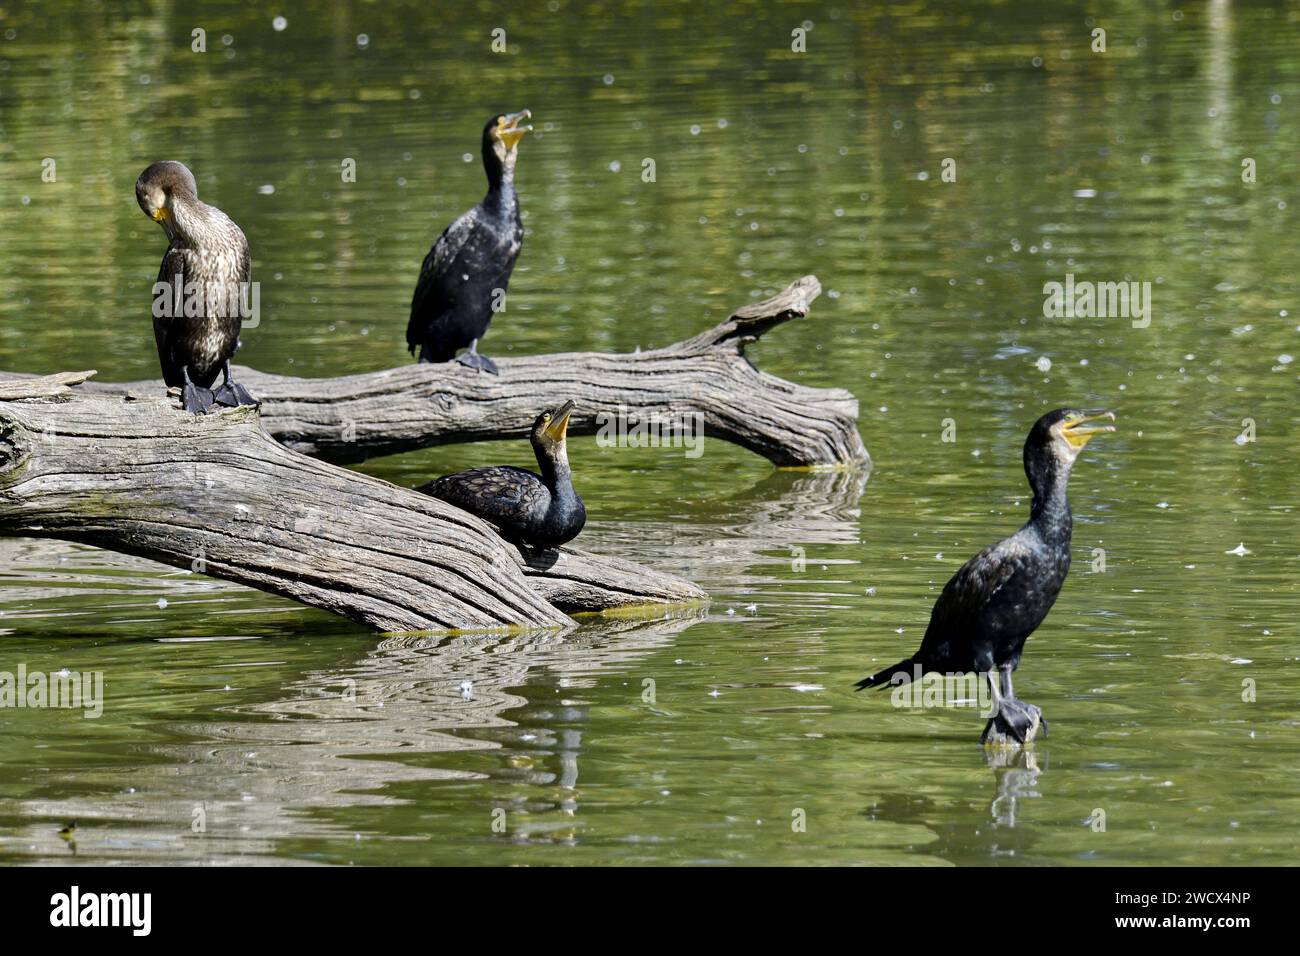 France, Doubs, wildlife, bird, Great cormorant (Phalacrocorax carbo) Stock Photo